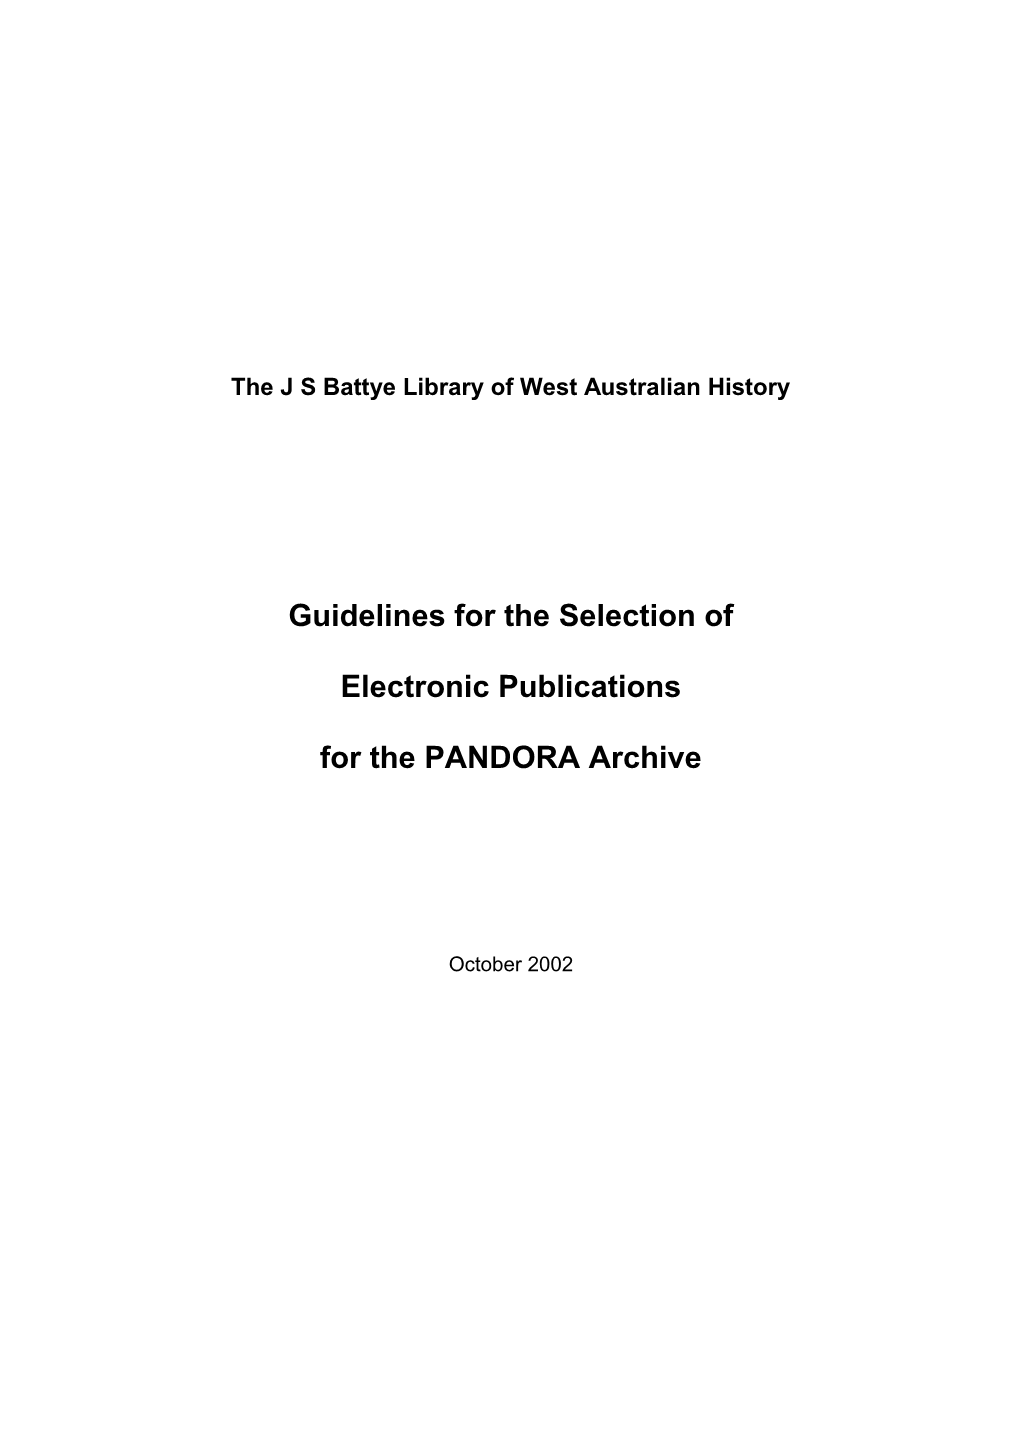 The J S Battye Library of West Australian History